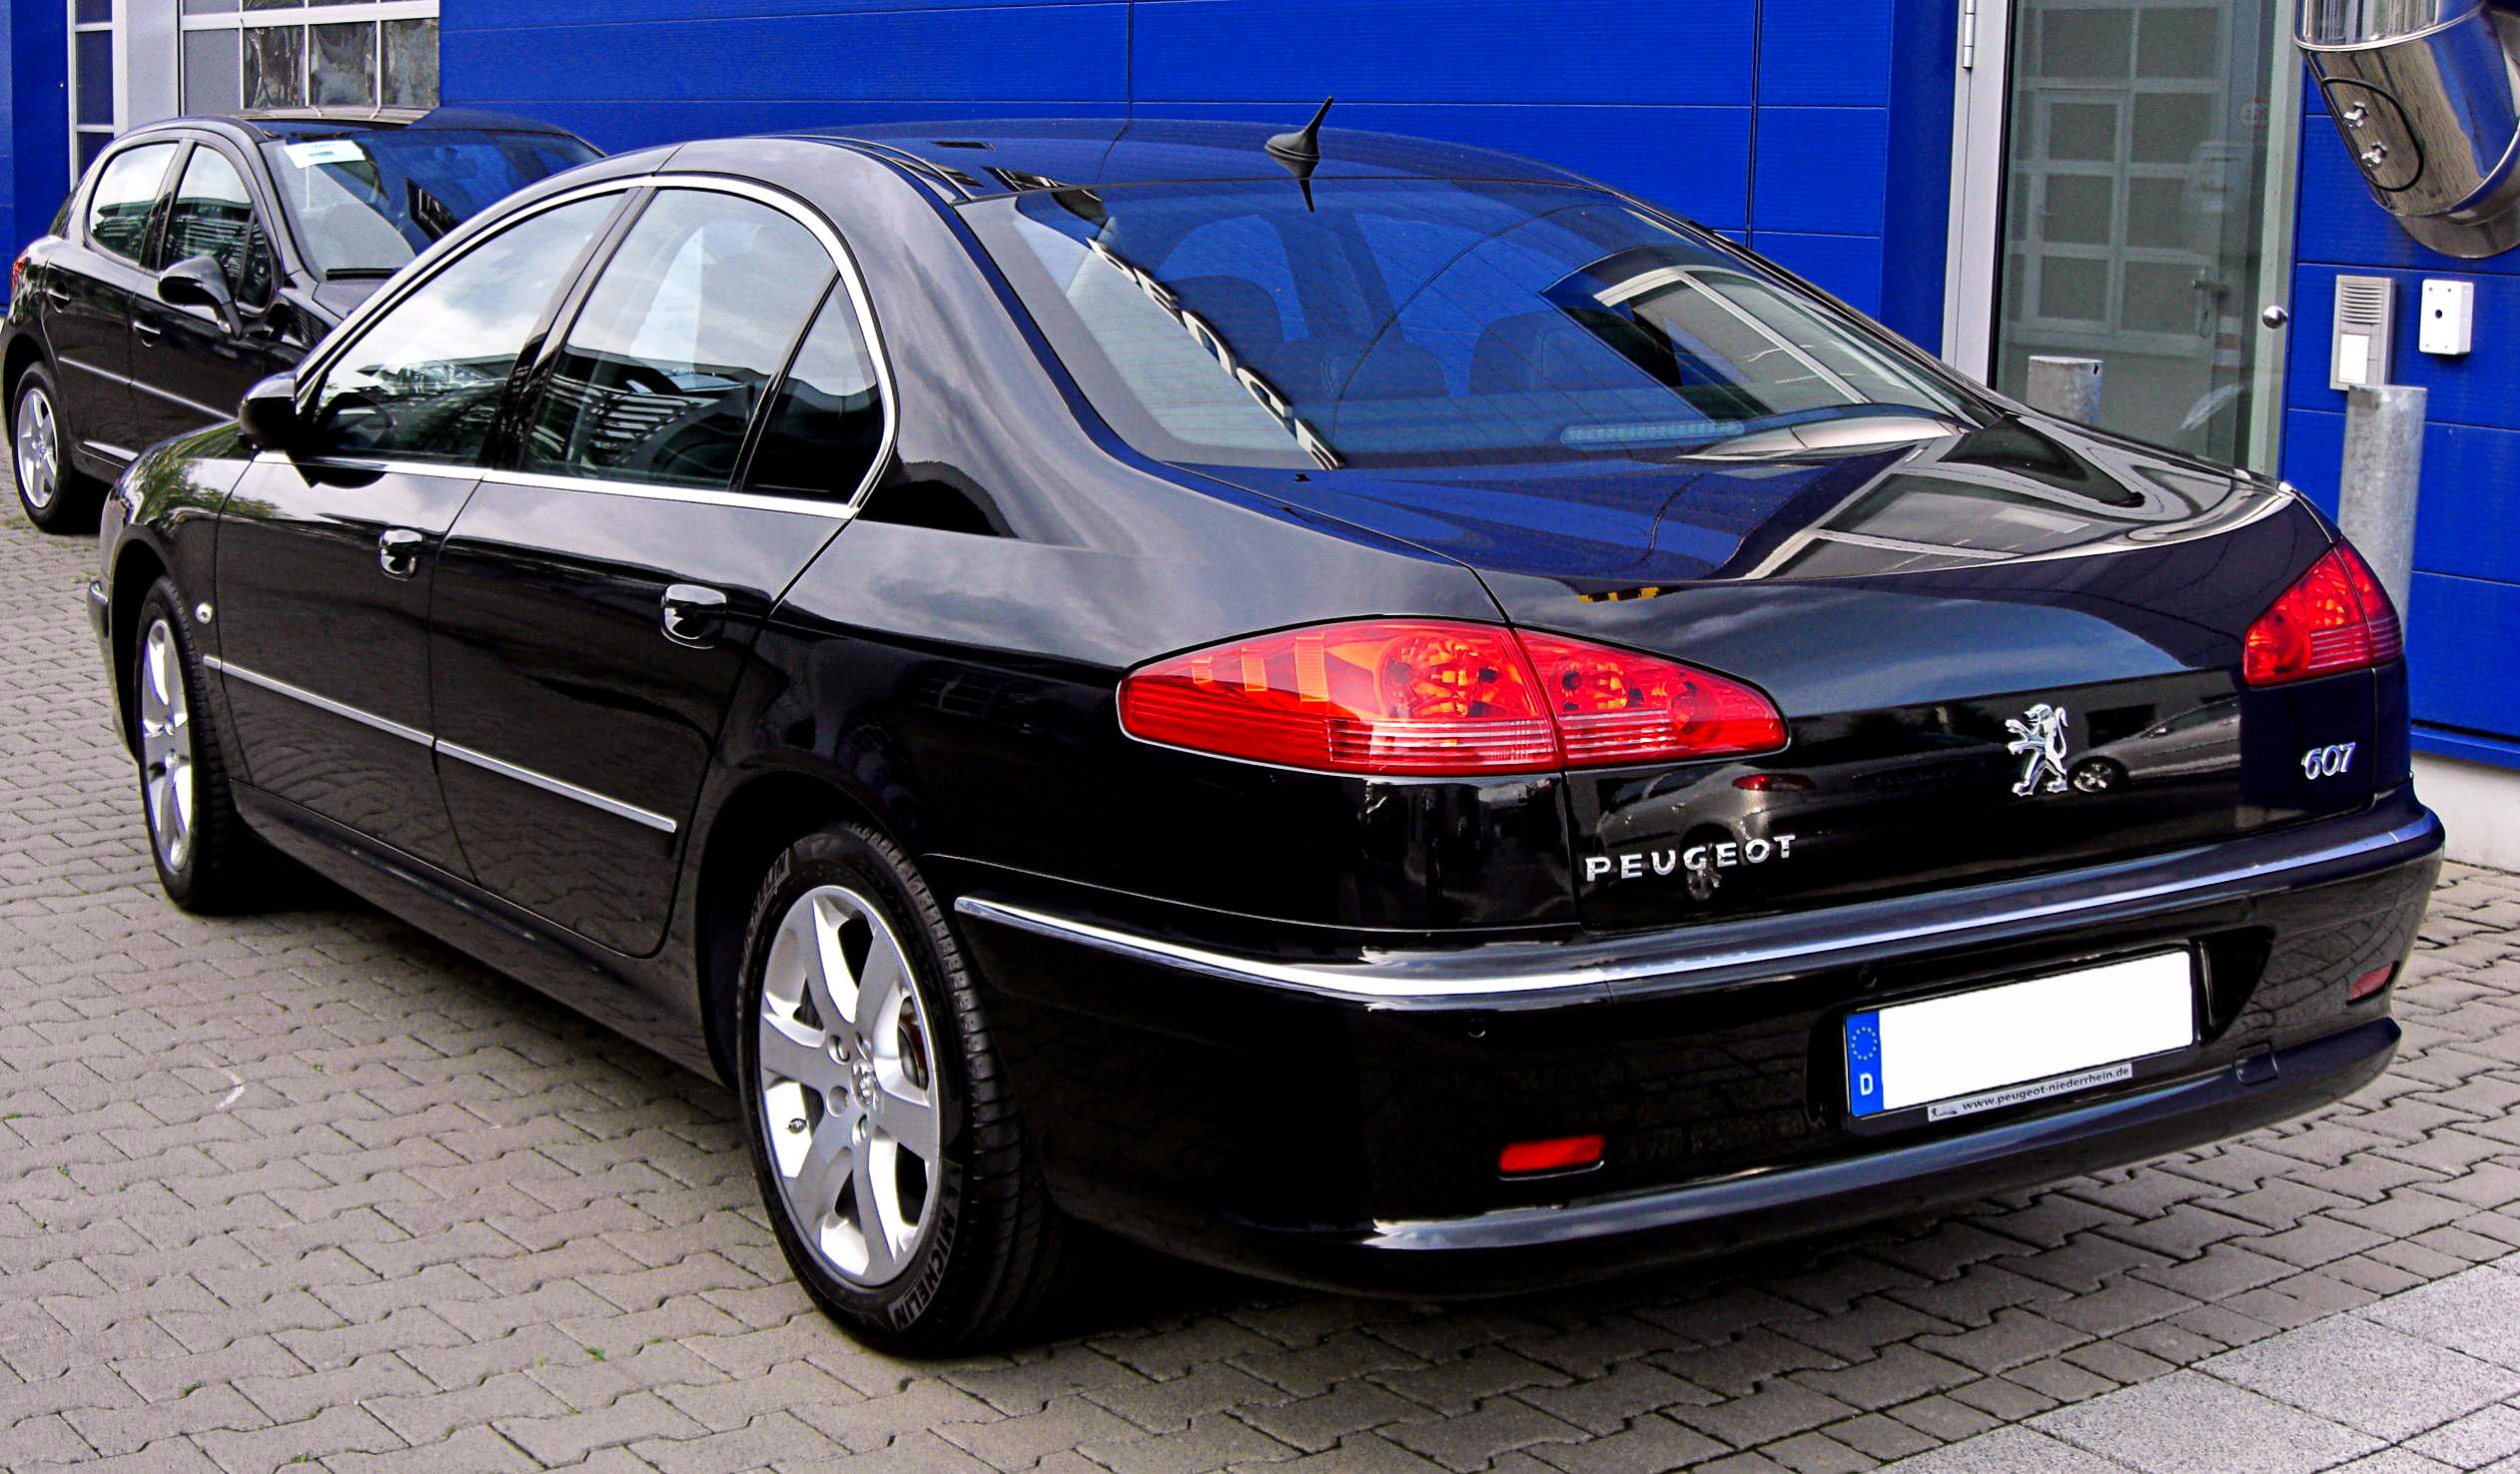 Peugeot 607 image #6